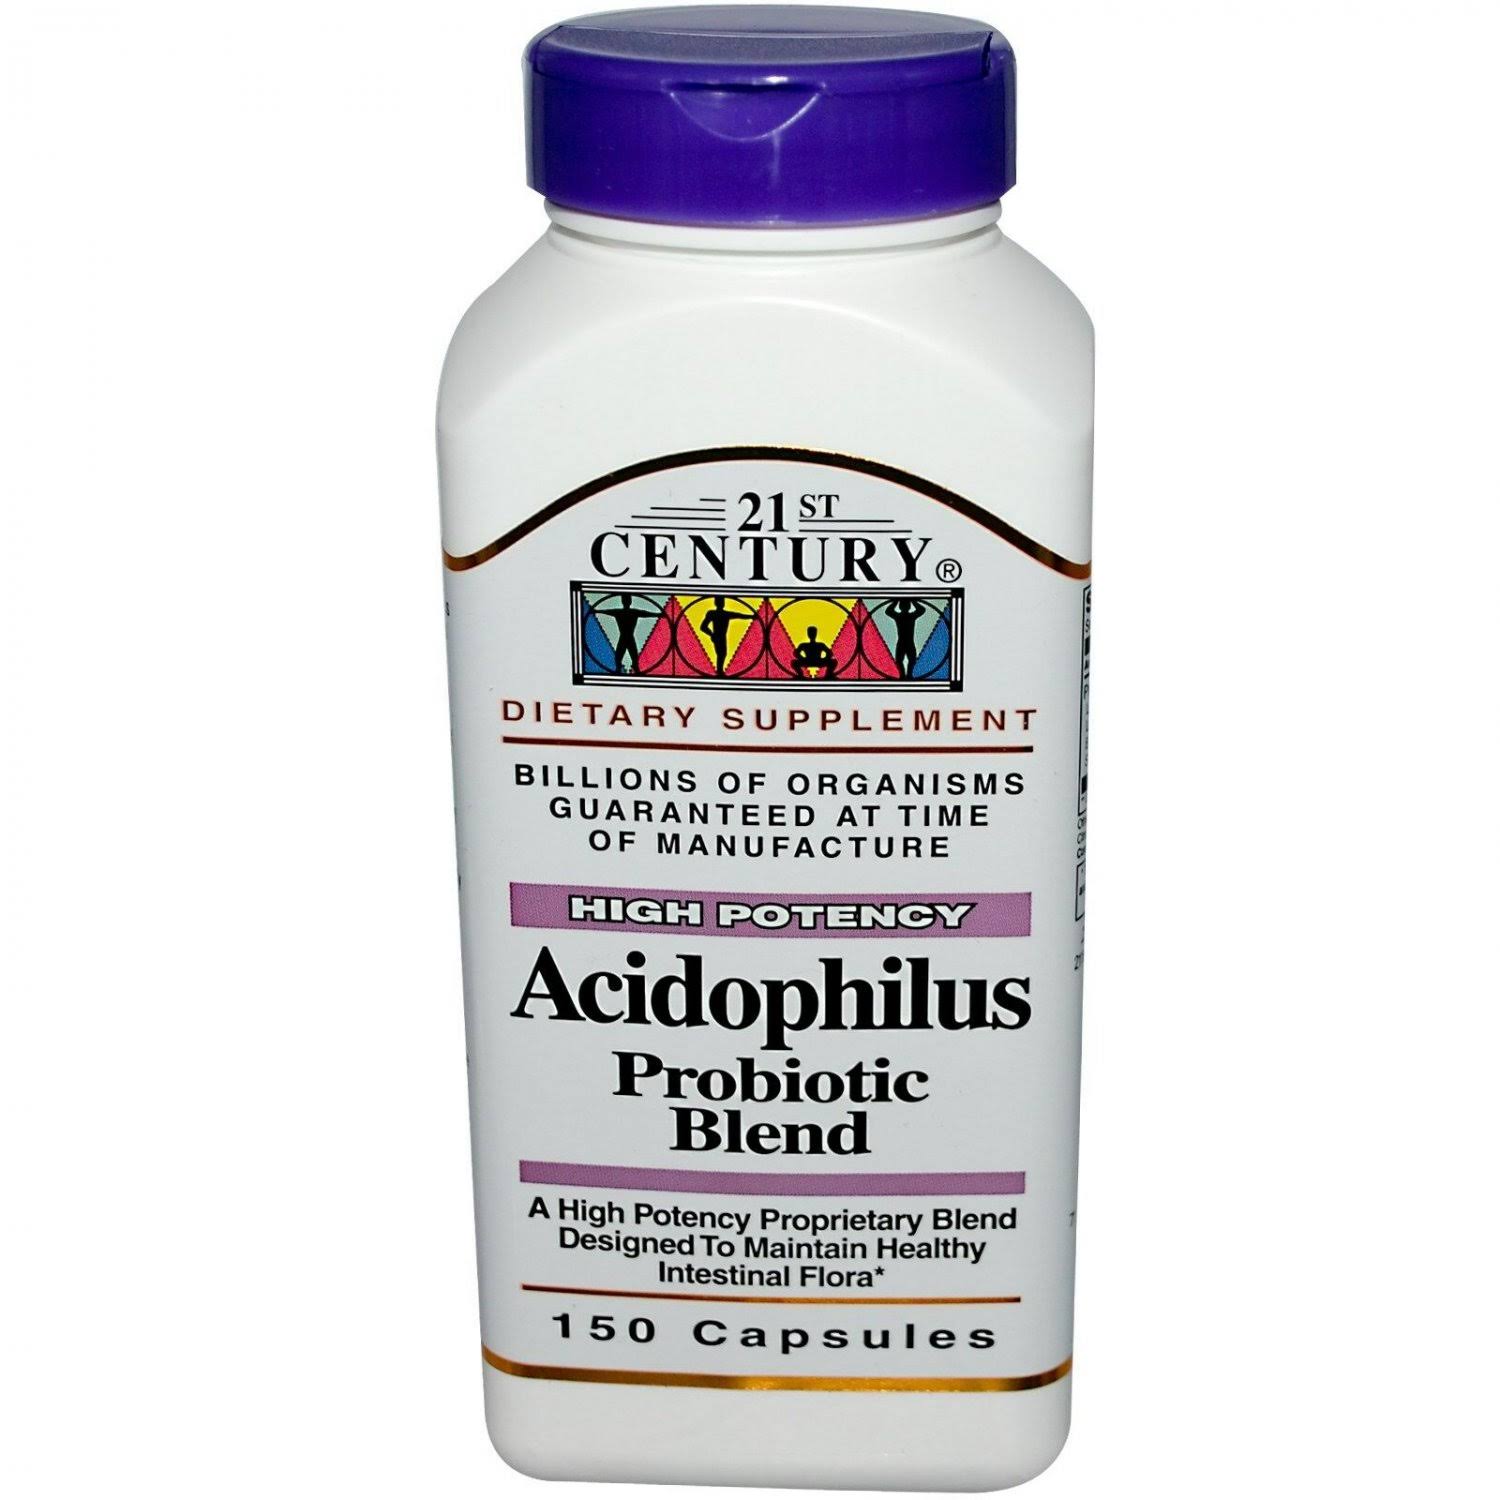 21st Century Acidophilus Probiotic Blend Supplement - 150ct